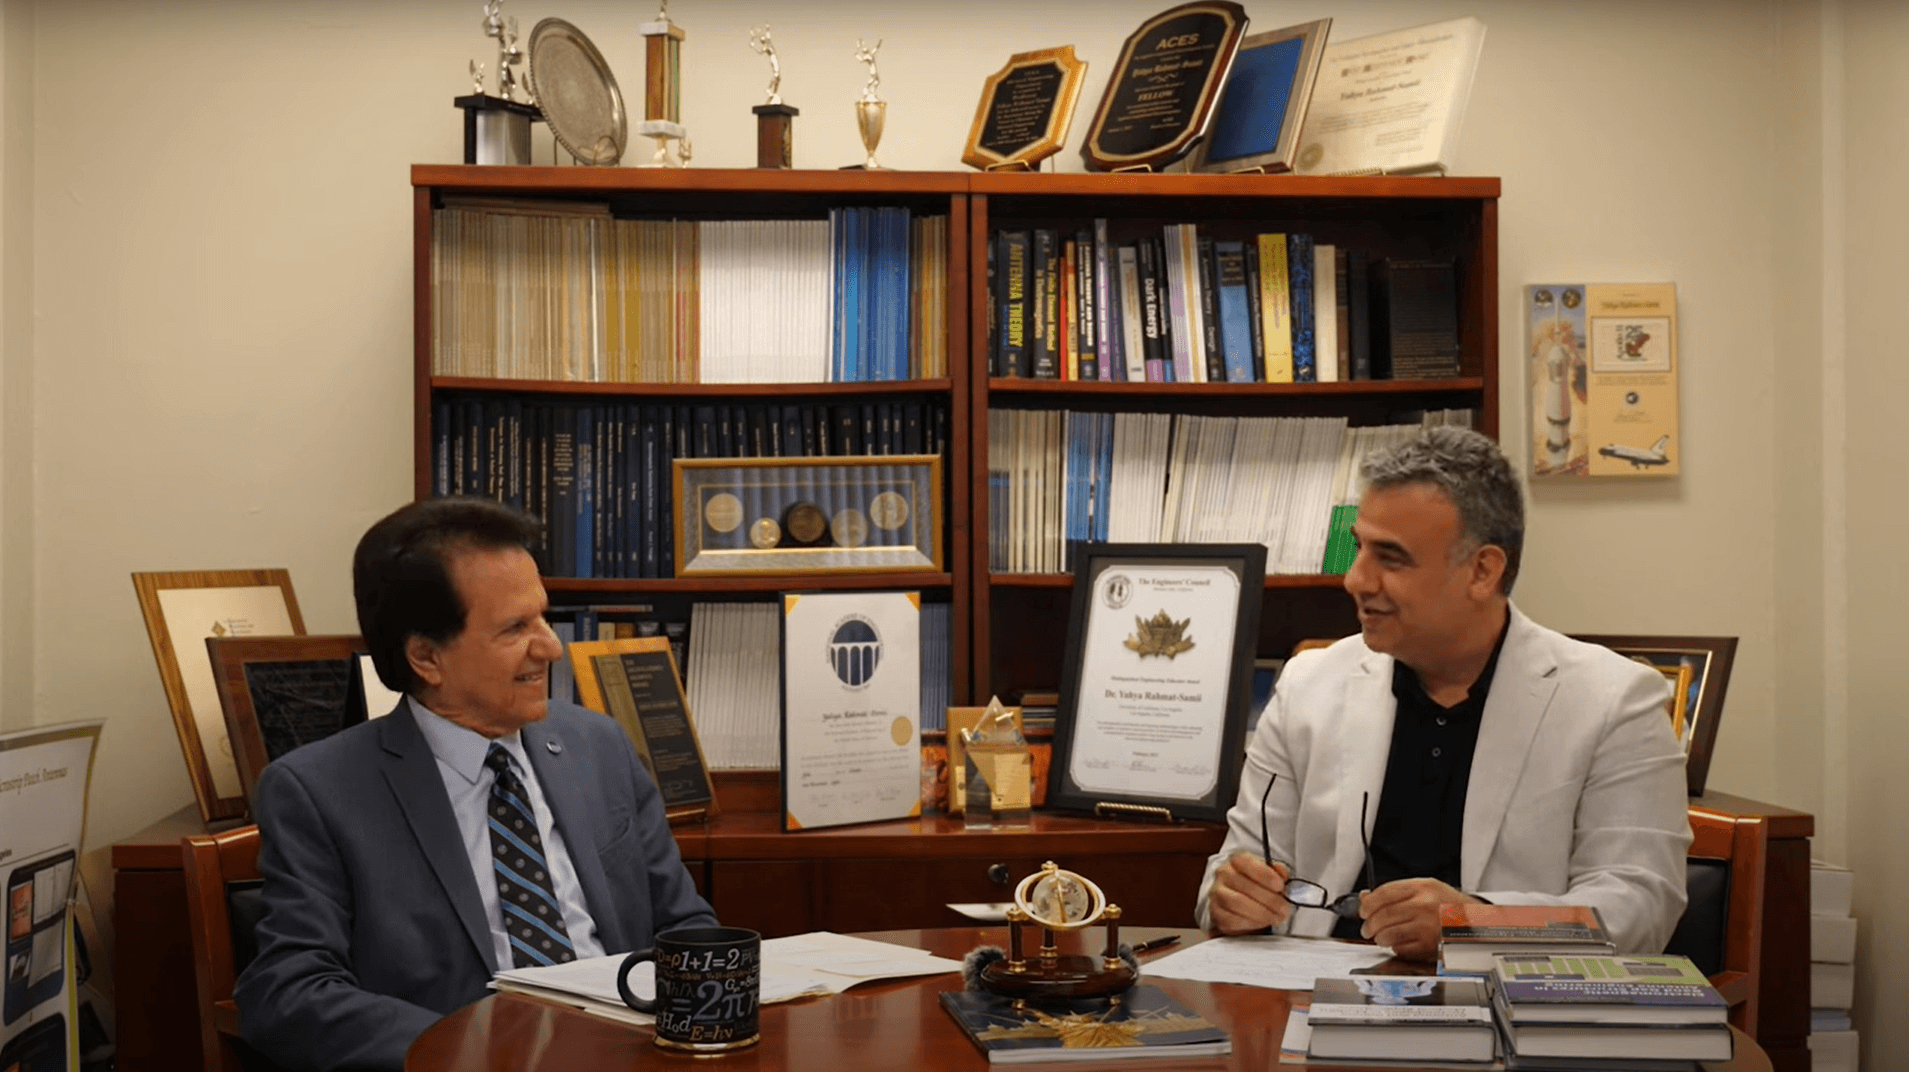 IEEE Antennas and Propagation Society interviewed Distinguished Professor Yahya Rahmat-Samii